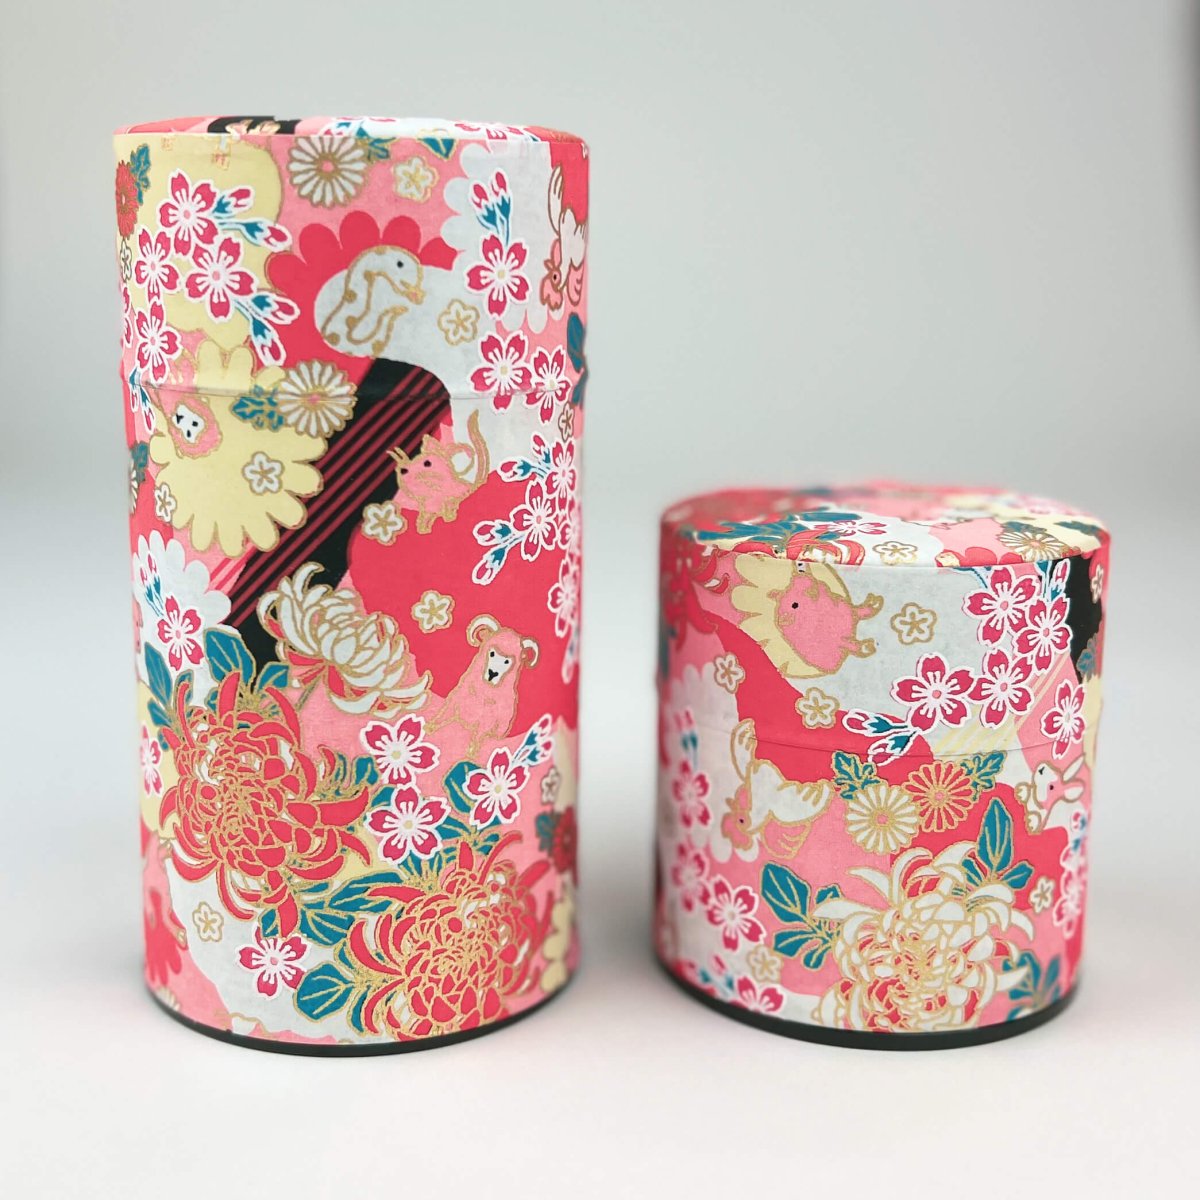 Washi Paper Japanese Tea Caddy - Chinese Zodiac